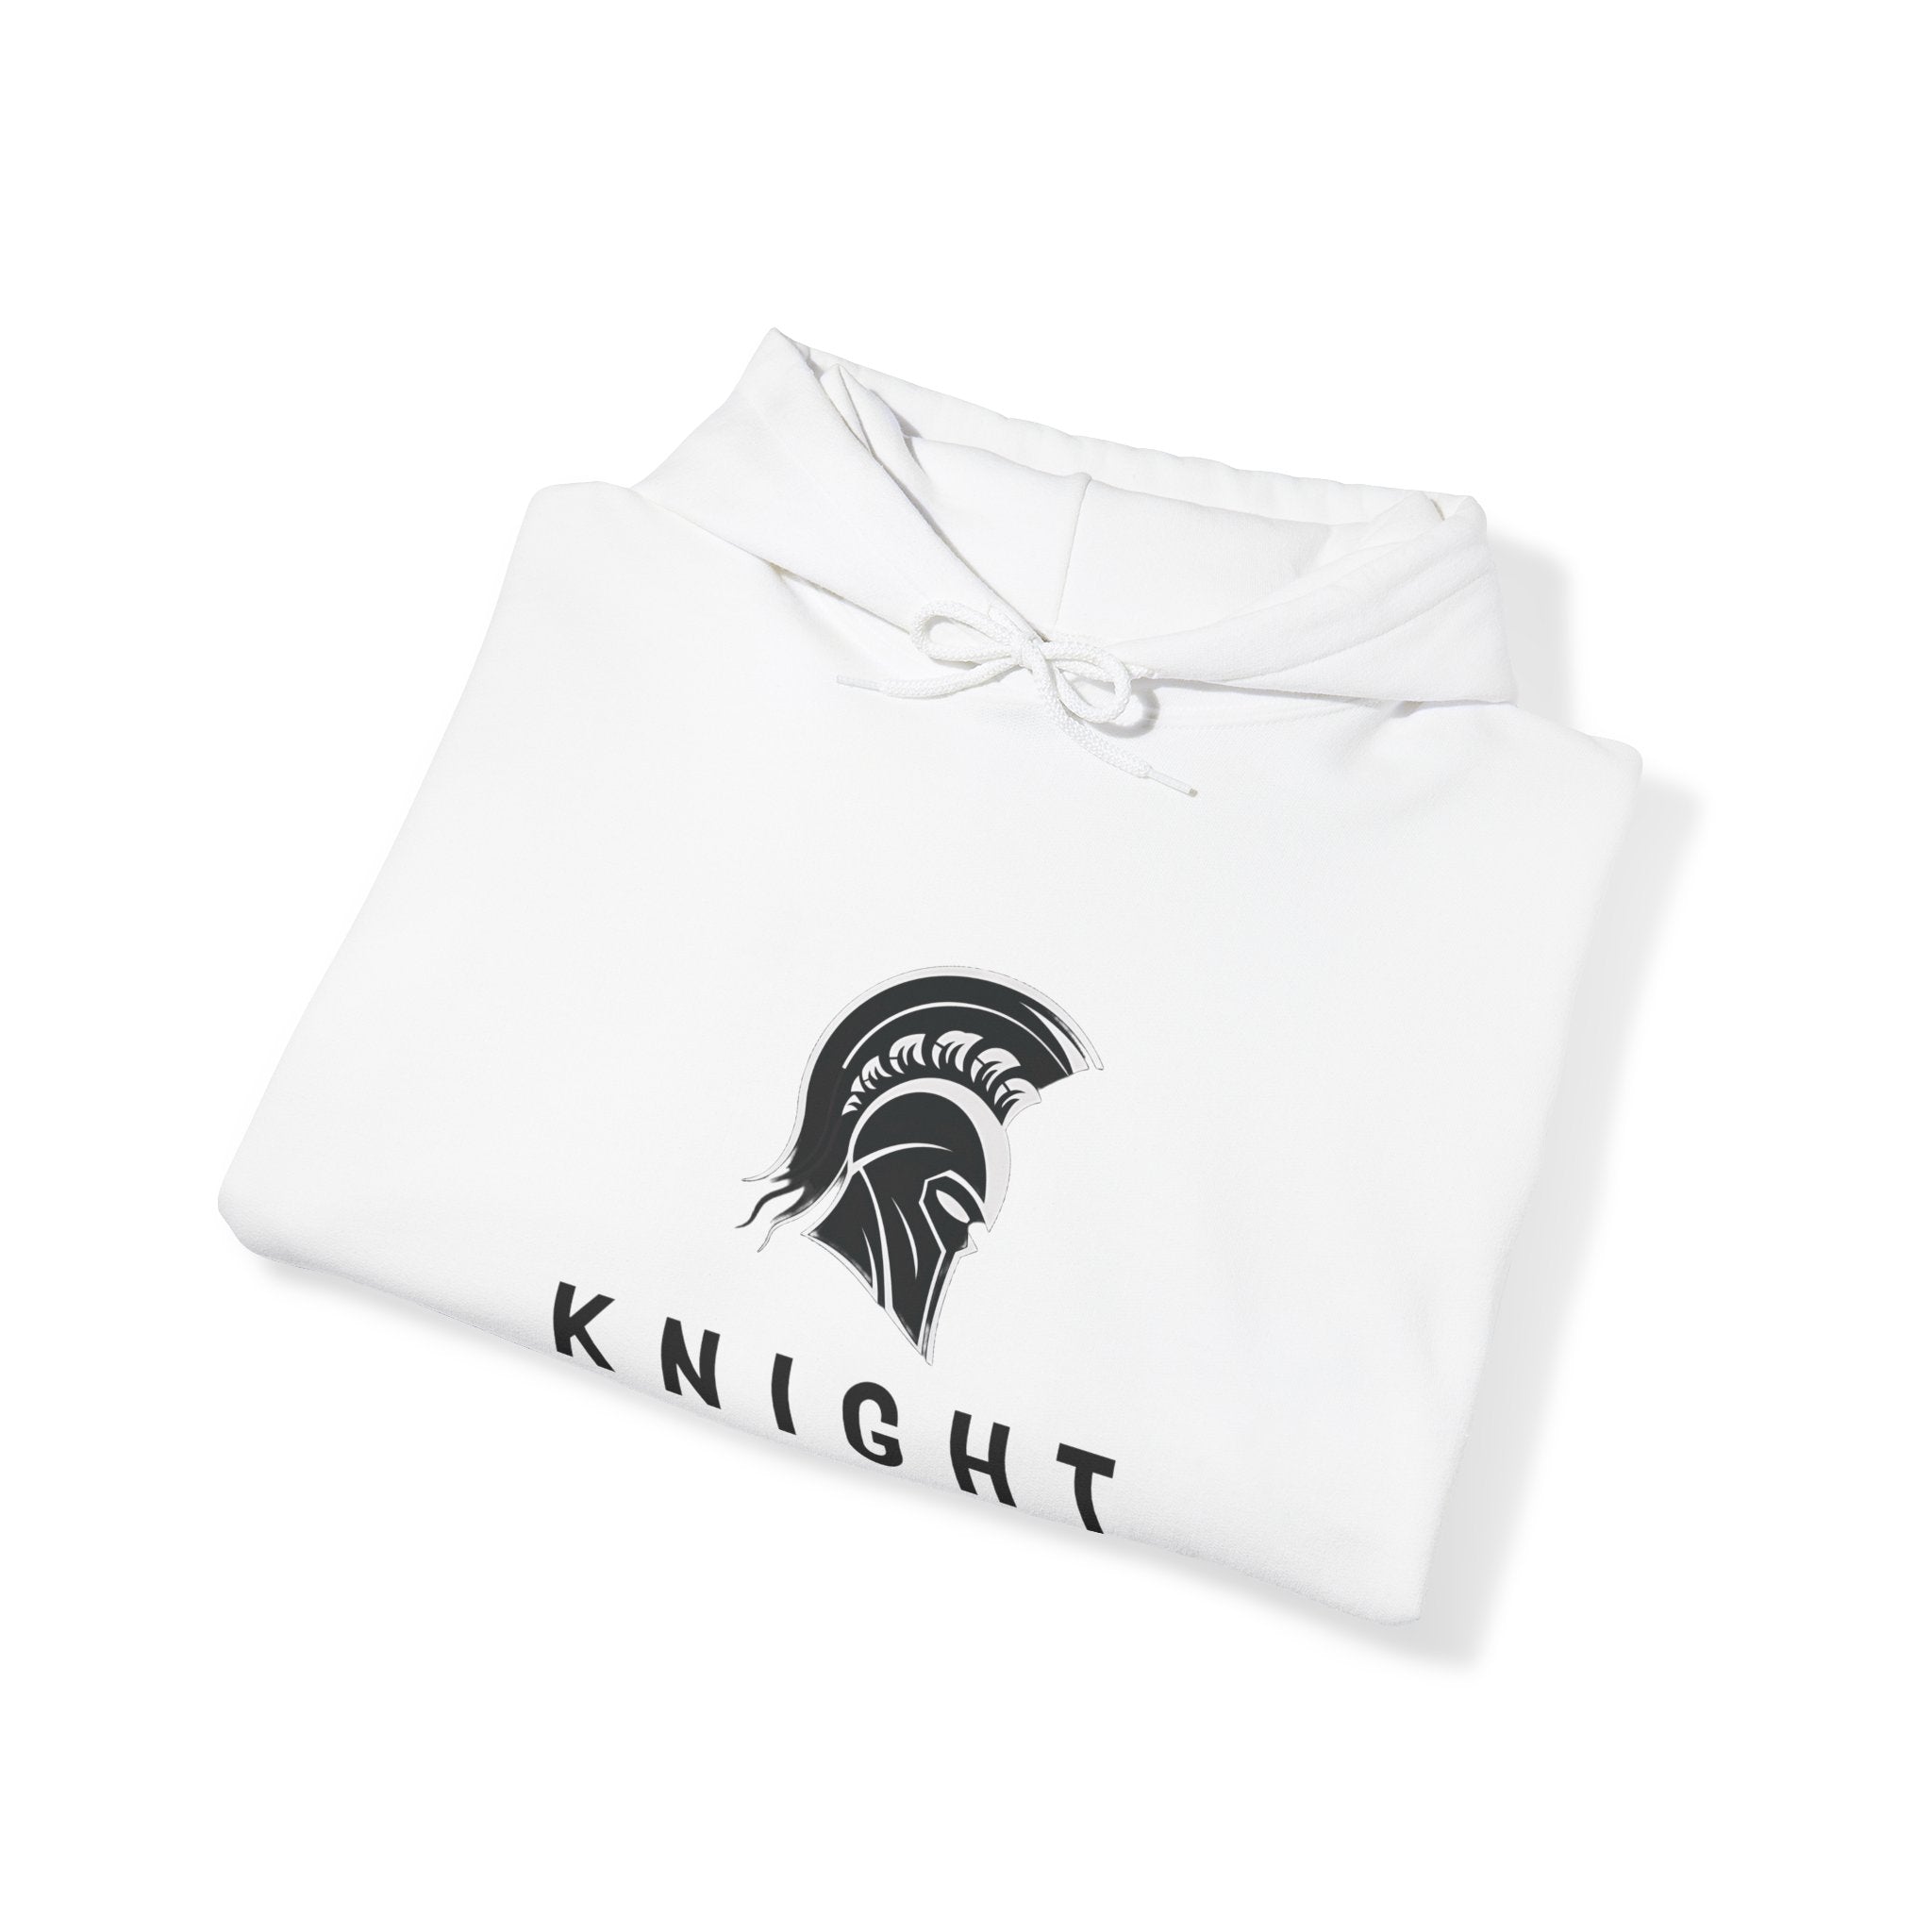 The Knight Hooded Sweatshirt